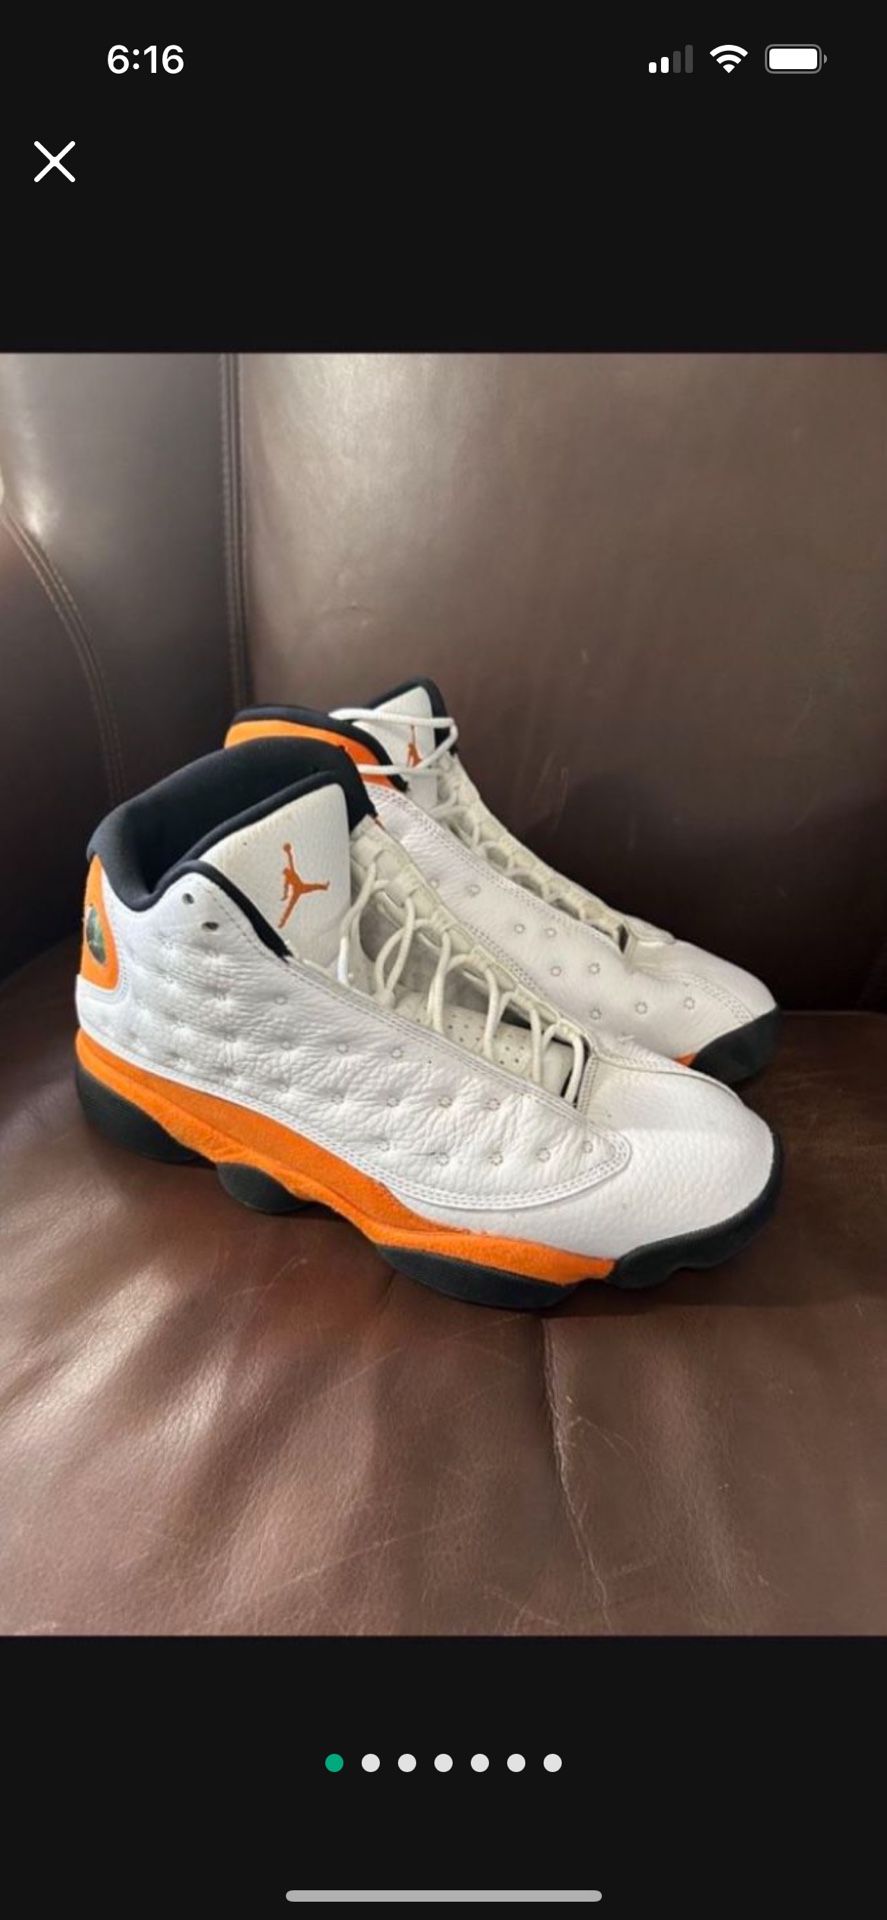 Nike Air Jordan 13 Retro Starfish 414571-108 Size 9.5 Mens 2021 White Orange